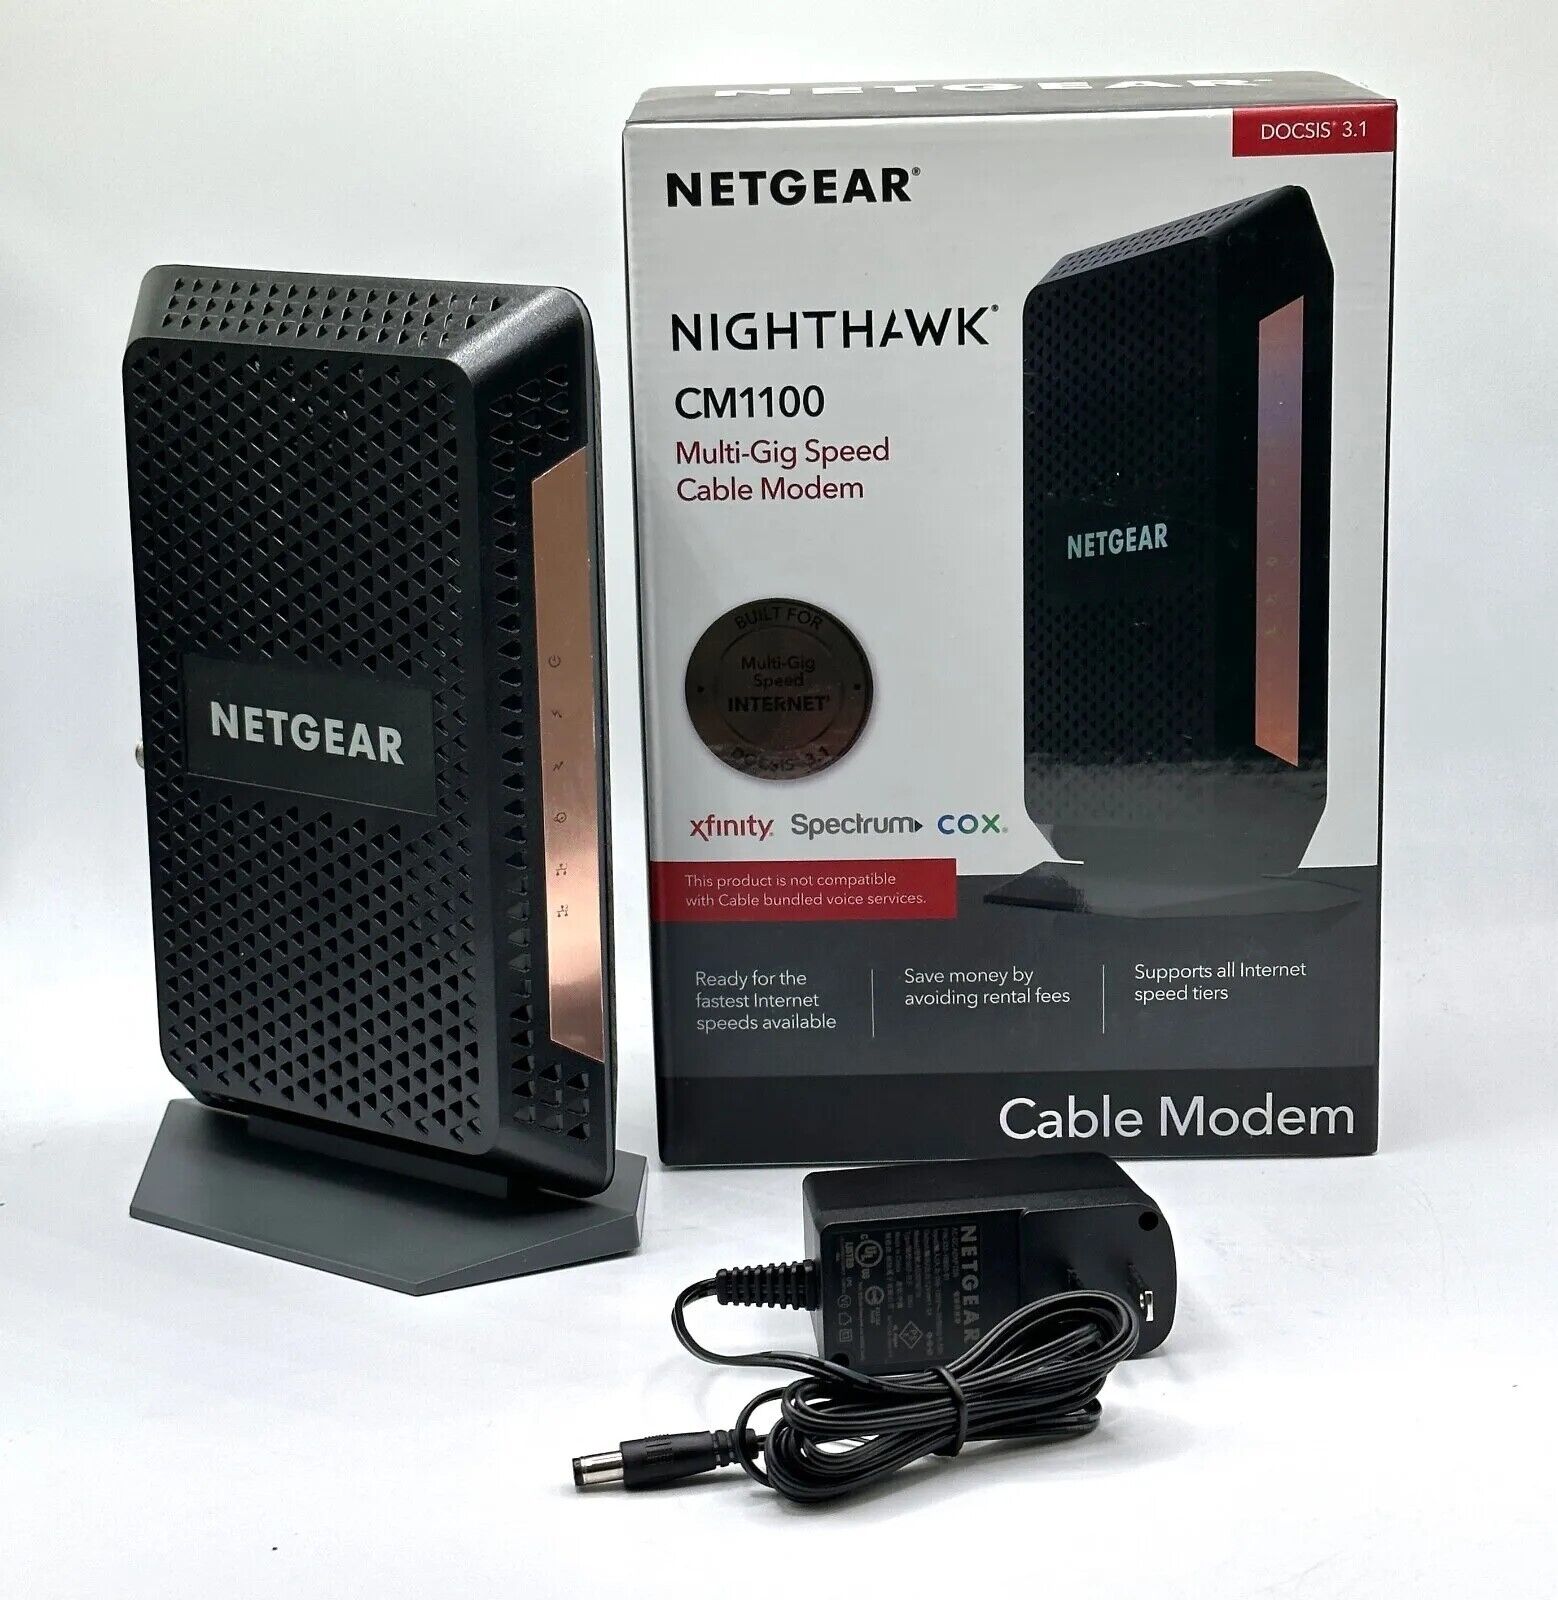 NETGEAR Nighthawk CM1100 Multi-Gig Speed Cable Modem DOCSIS 3.1 NEW